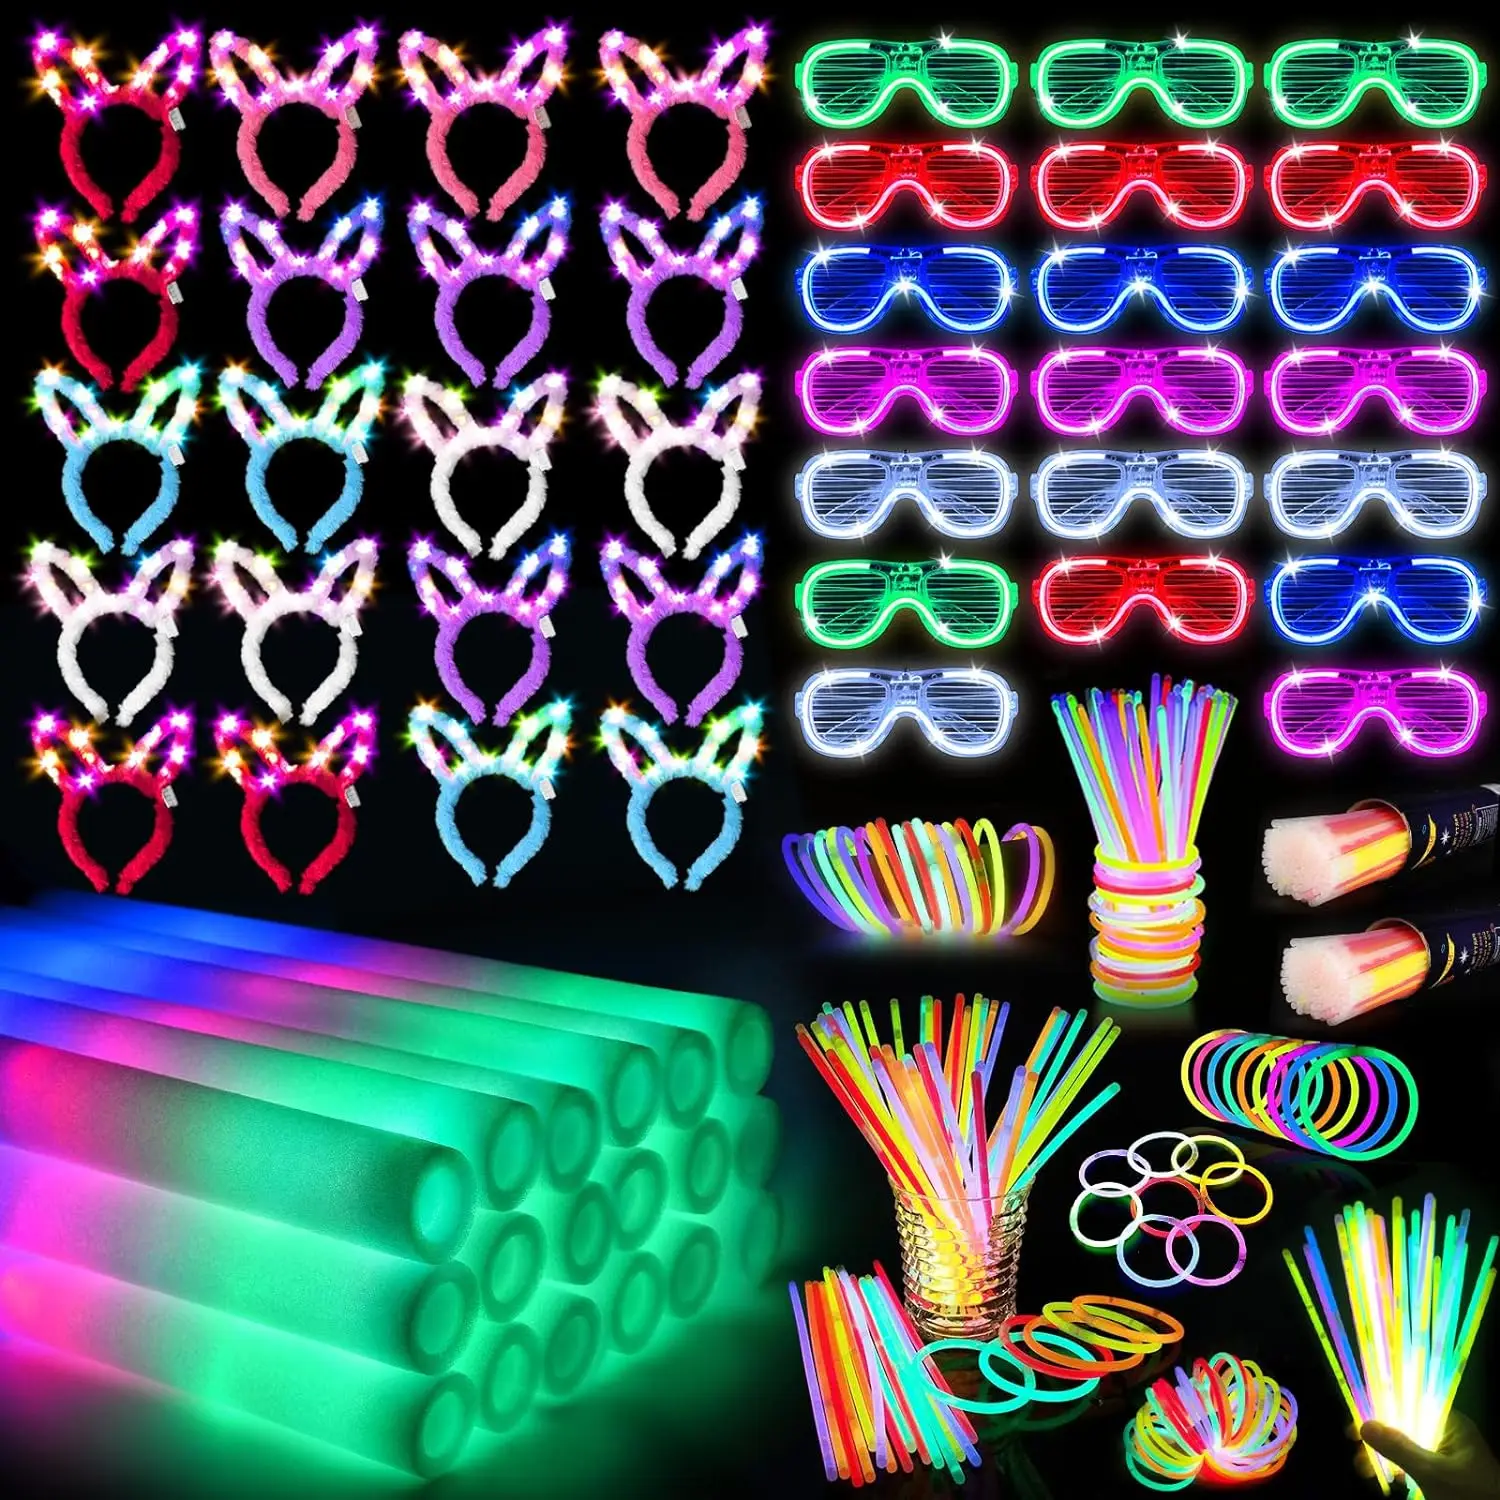 

Glow Sticks Glasses Favors, 20PCS Foam Glow Sticks, 20PCS LED Glasses, 20PCS Bunny Ear Headband 200PCS Glow Sticks